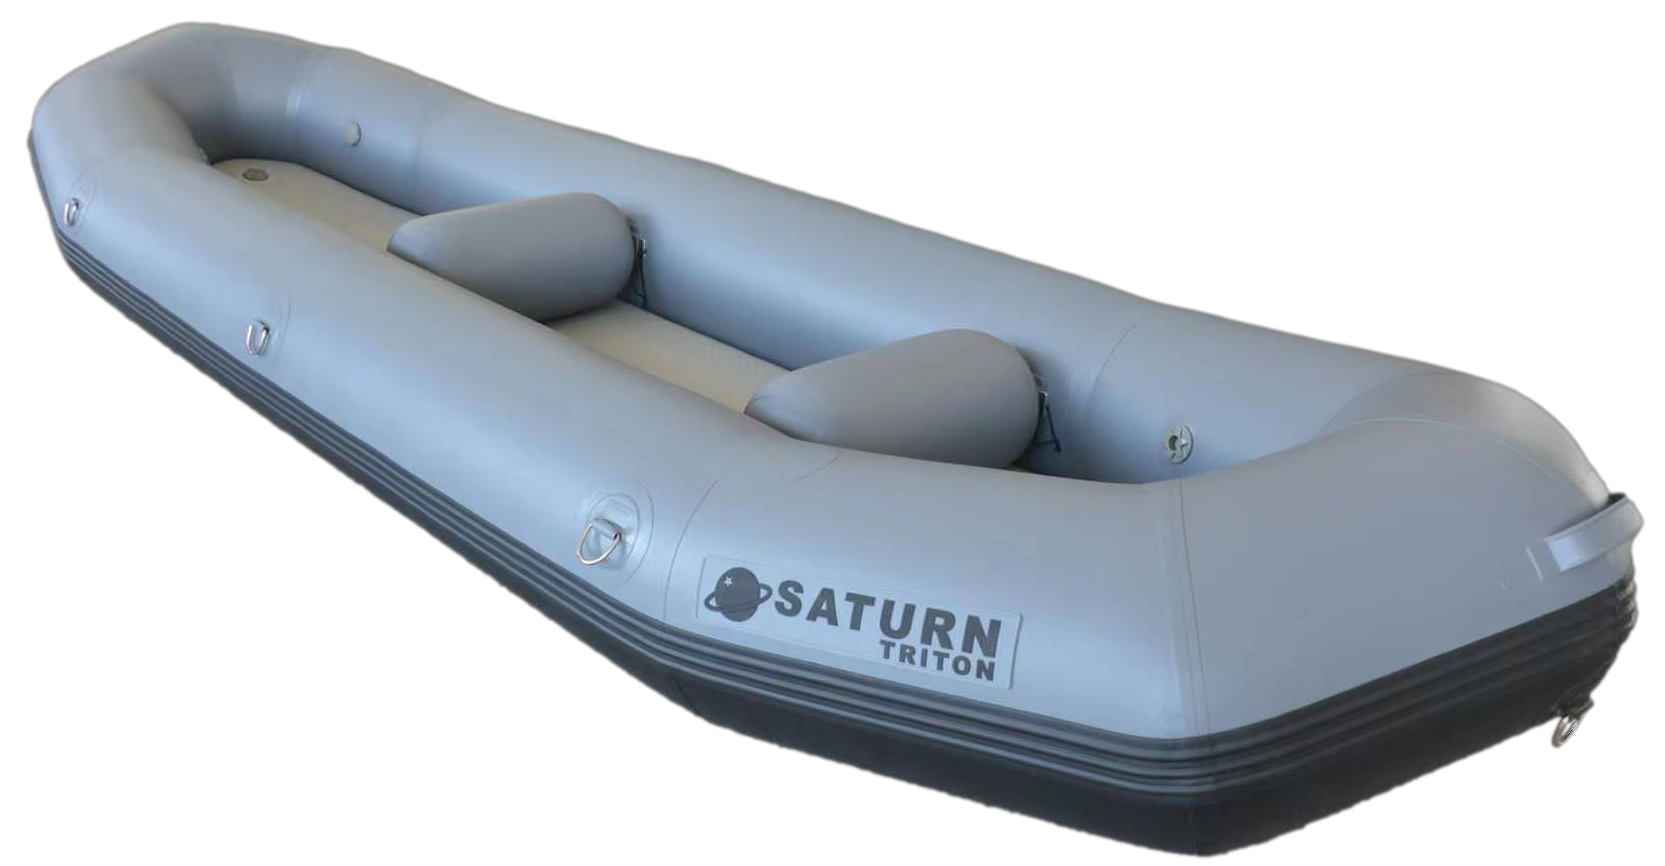 14' Saturn Triton Flatwater Fishing Raft